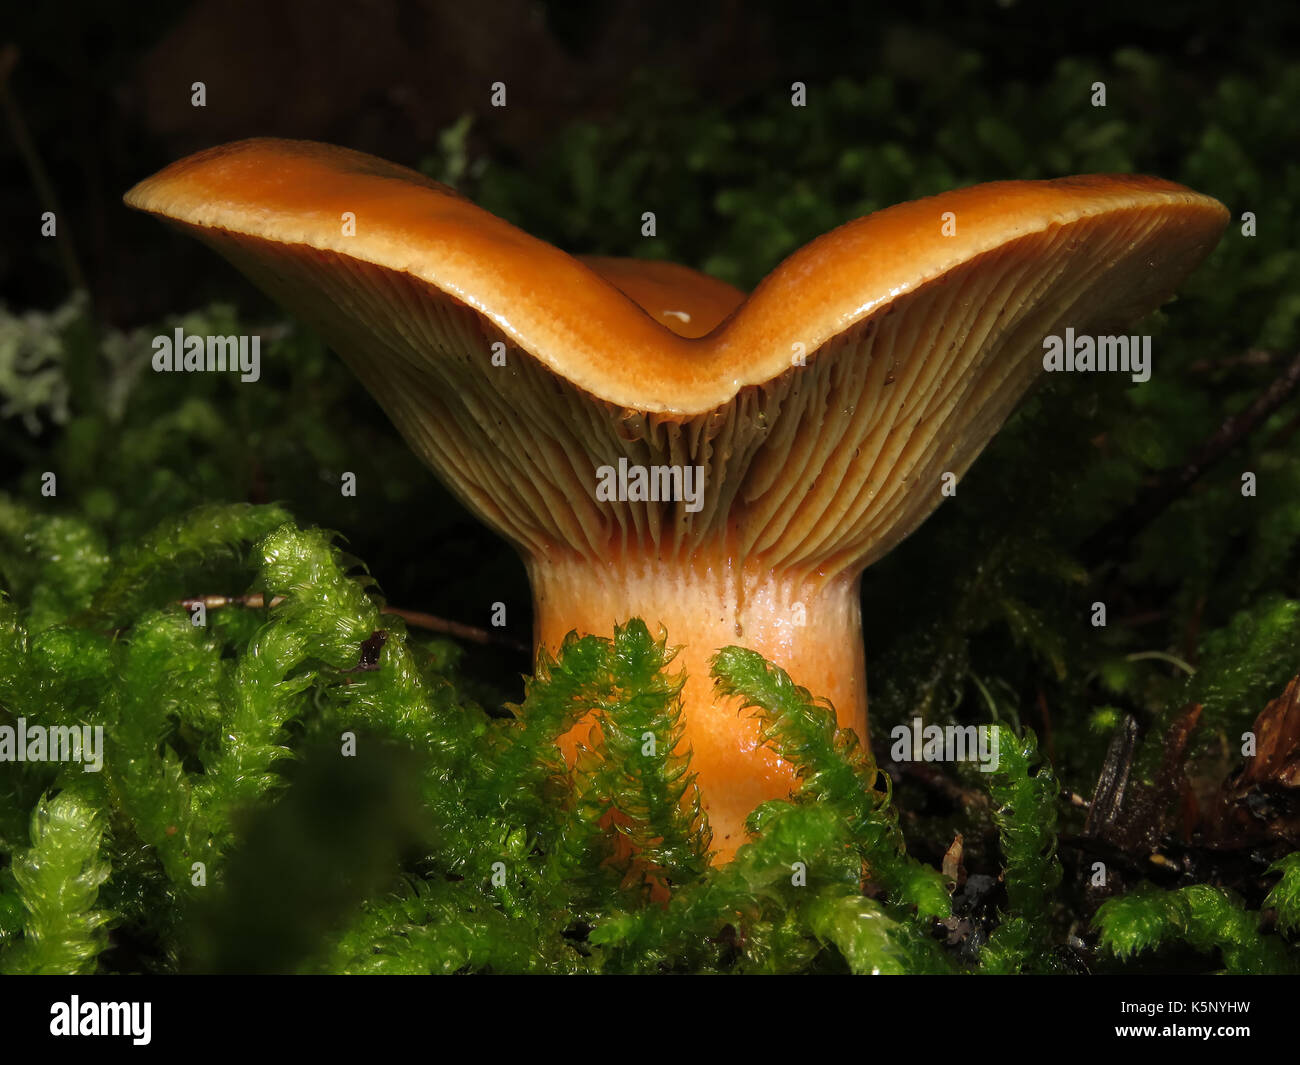 Wild edible mushroom Lactarius deliciosus (saffron milk cap or red pine mushroom) growing in moss in October in Wenatchee National Forest, WA, USA Stock Photo